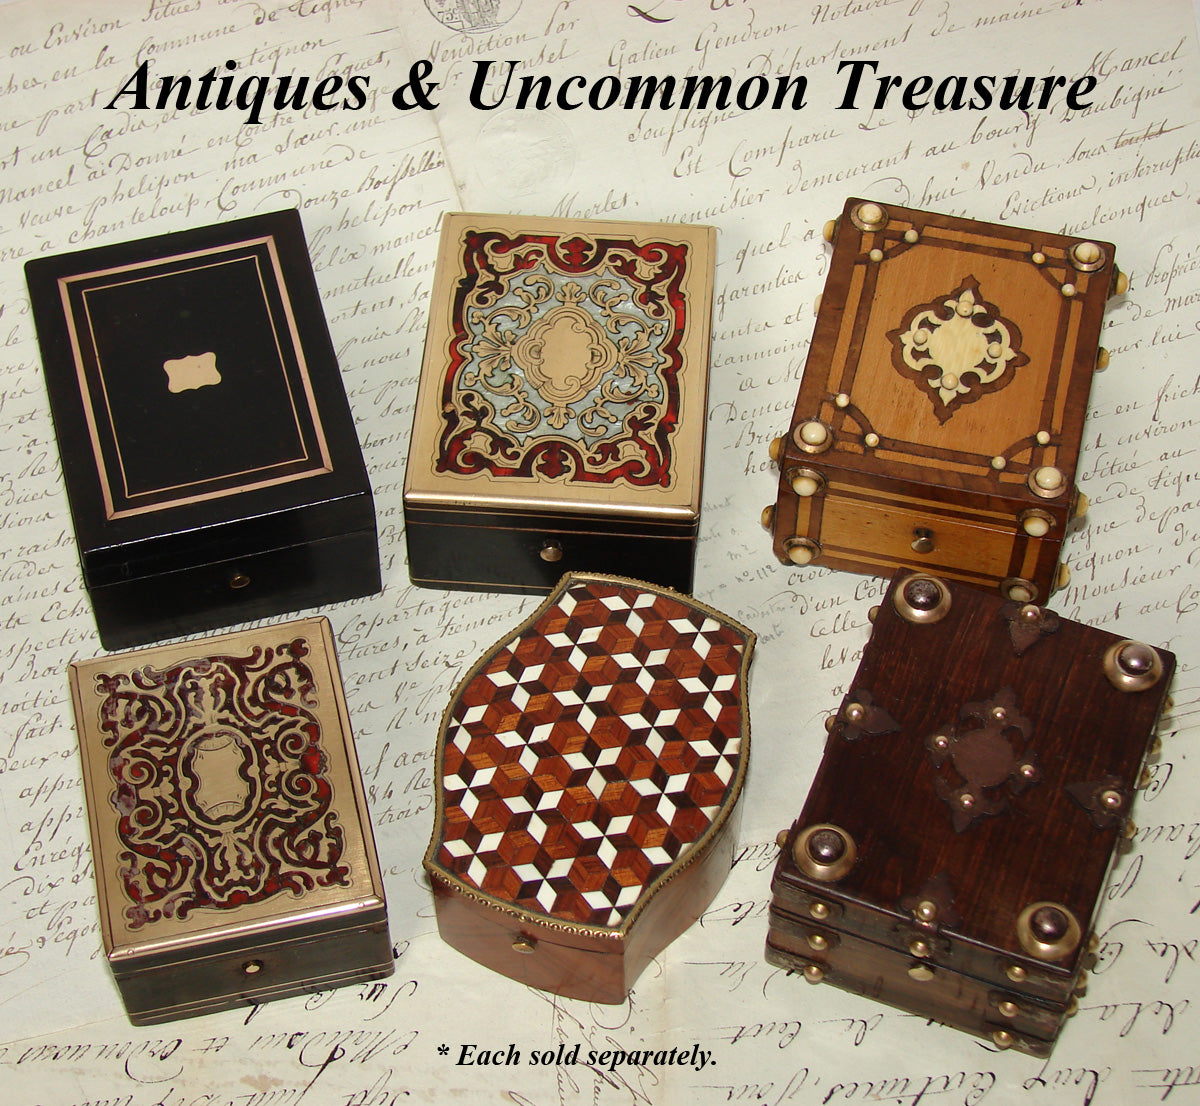 Superb Antique French Napoleon III Era Pocket Watch Box, Display Casket, Tumbling Blocks Marquetry Inlay